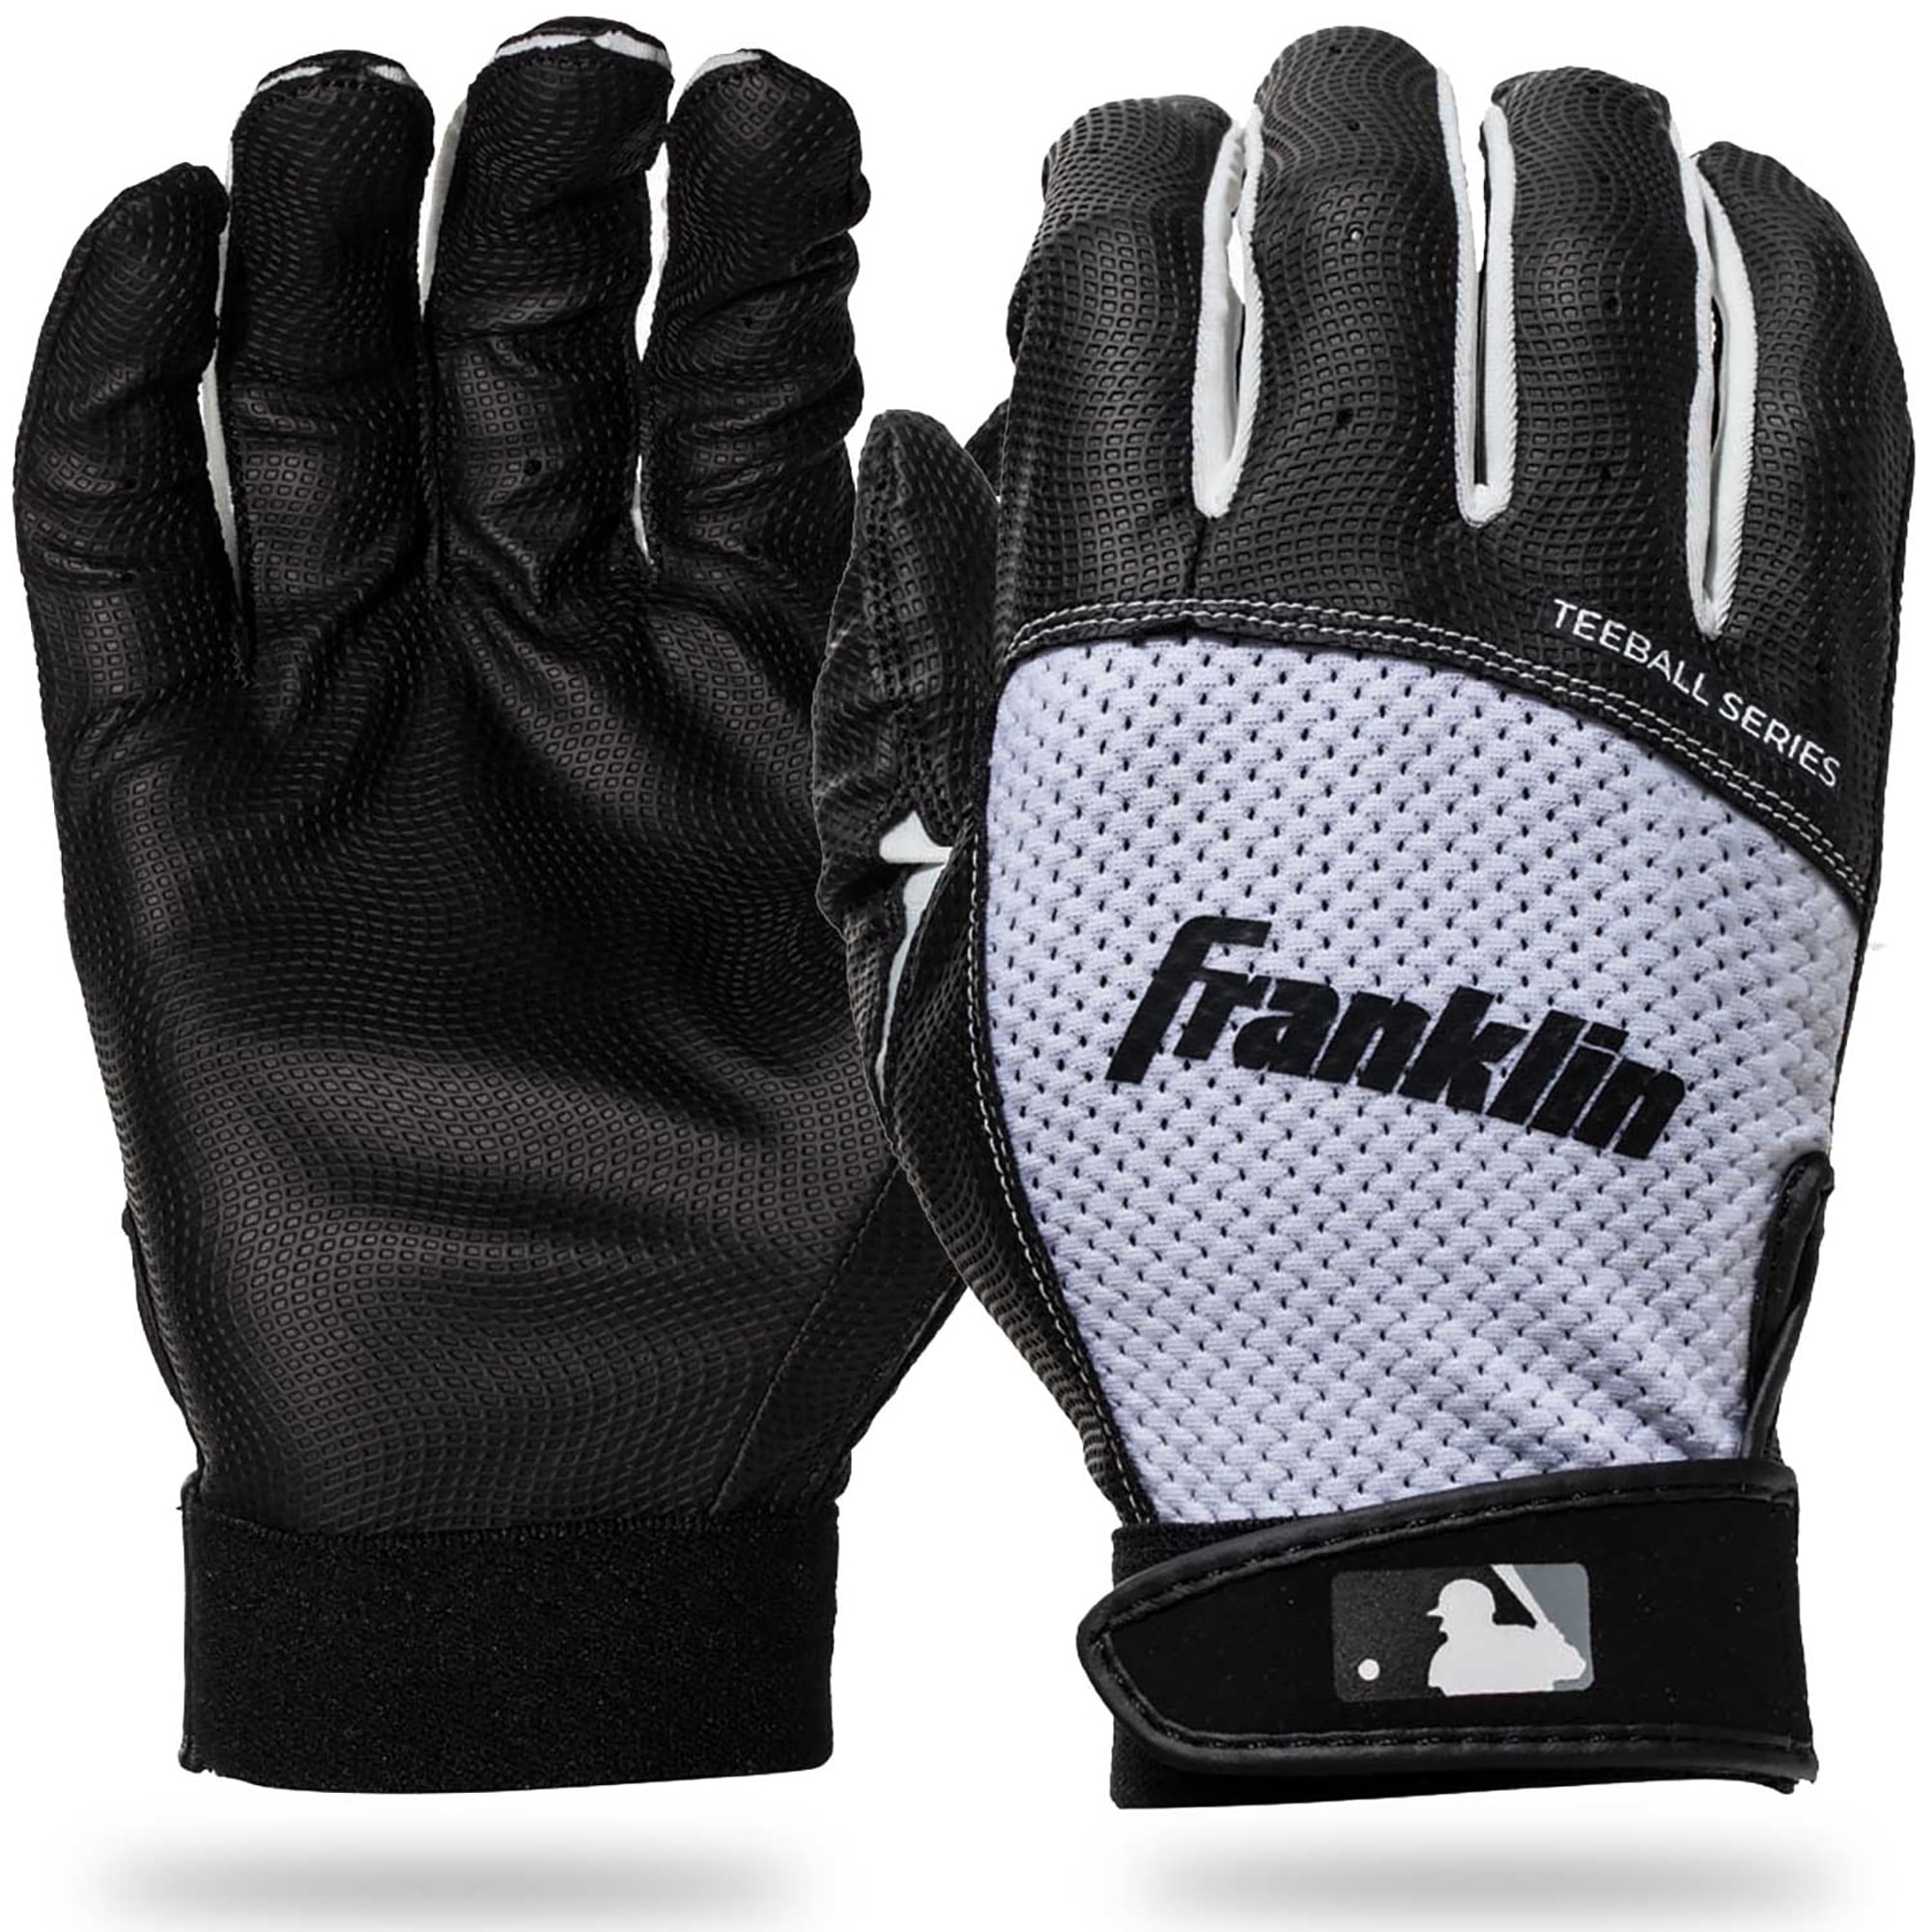 Franklin Sports Youth Teeball Flex Batting Gloves Black Small for sale online 